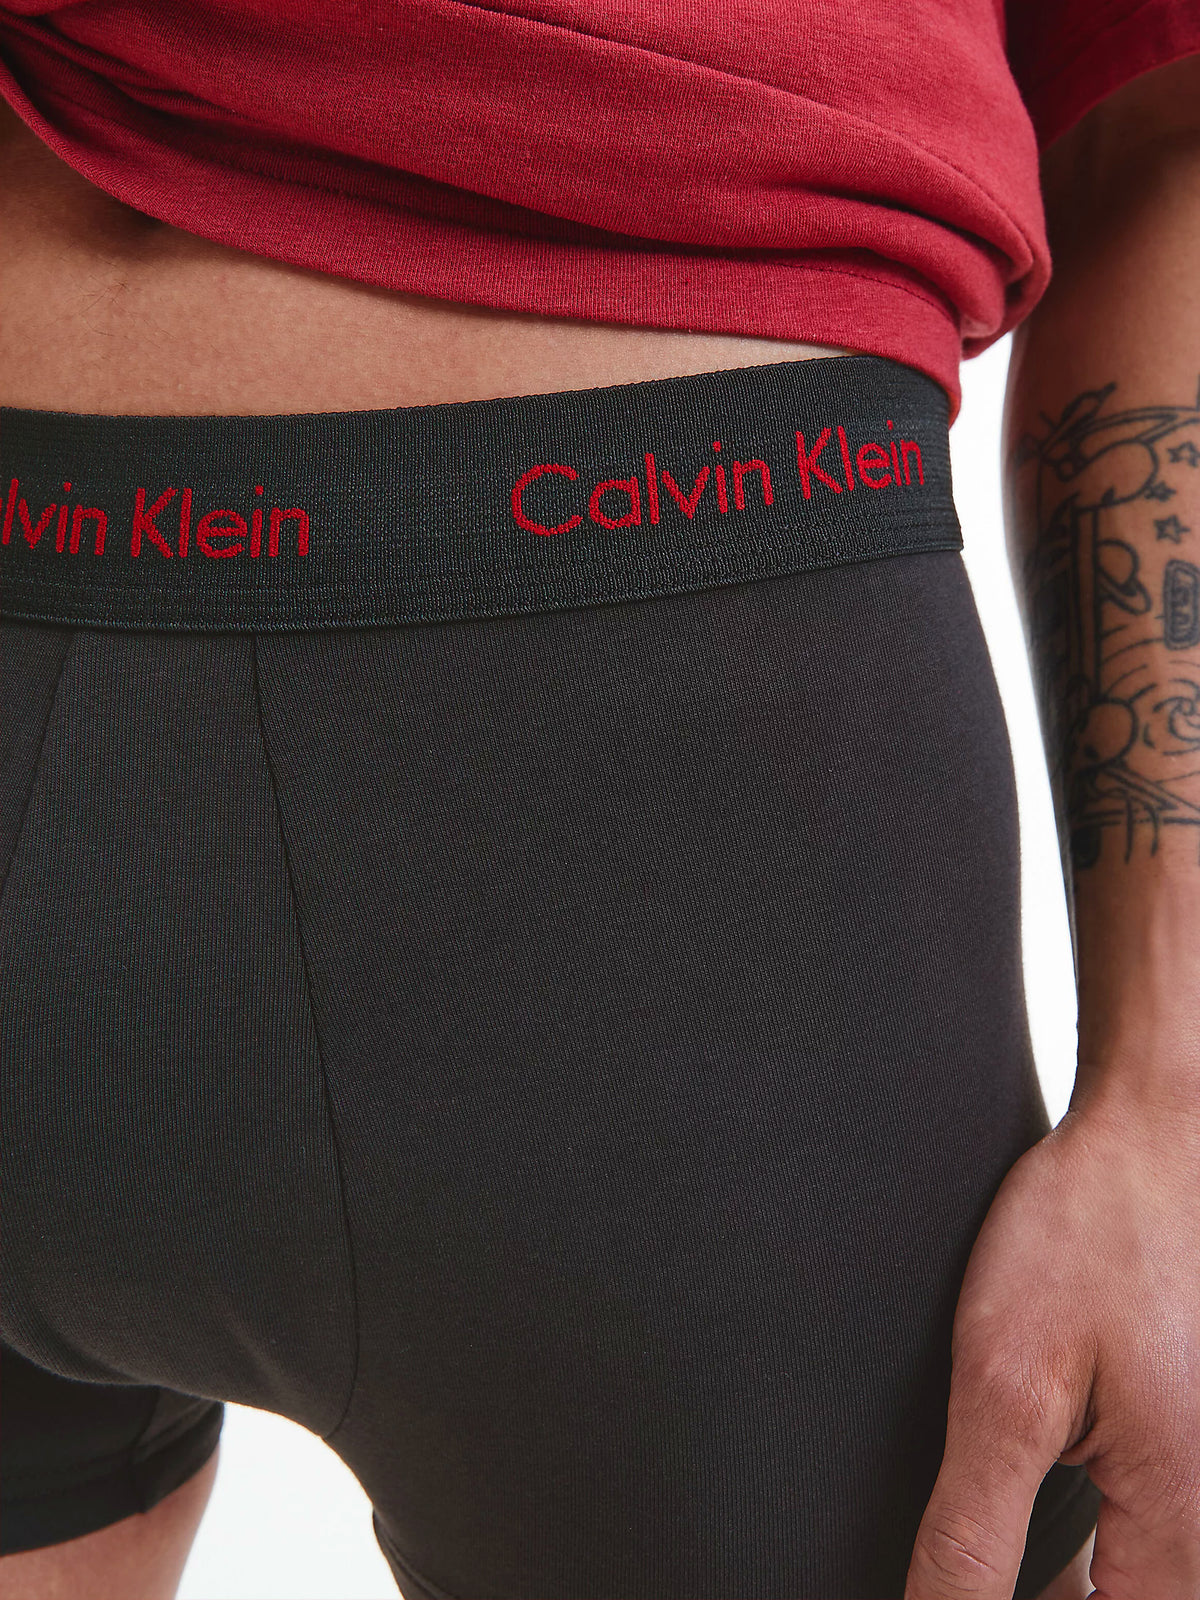 Mens Calvin Klein Boxer Shorts Low Rise Trunks 3 Pack, 05, U2664G, B-Bright Camel/ Wht/ Red Crpt Logo